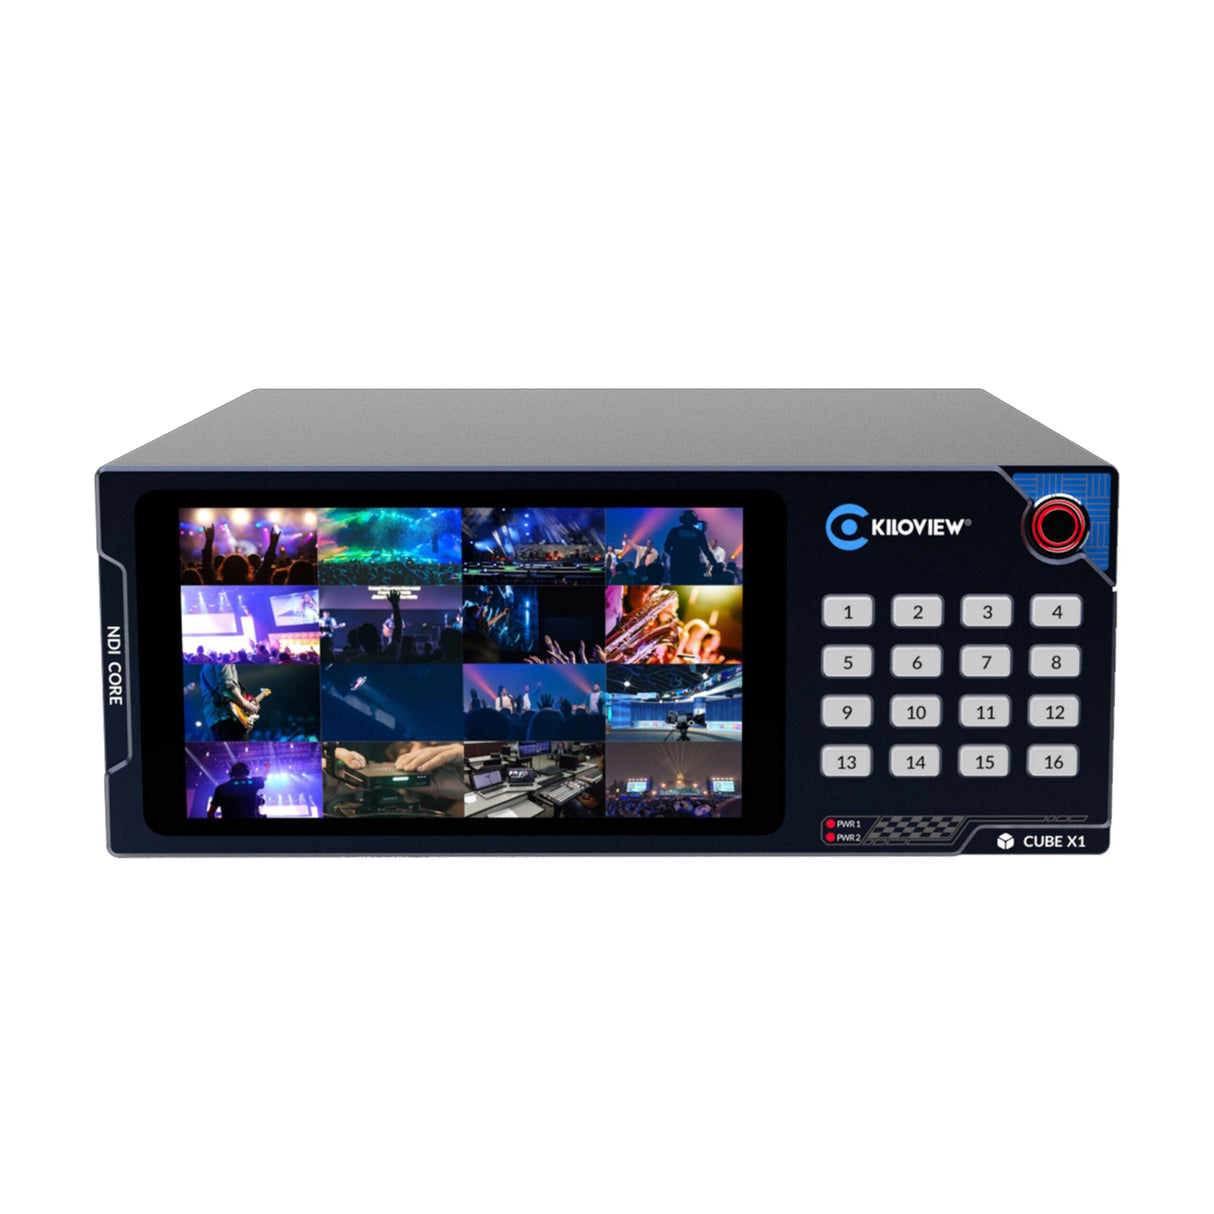 Kiloview Cube X1 NDI Core Multiplexed Video Switcher